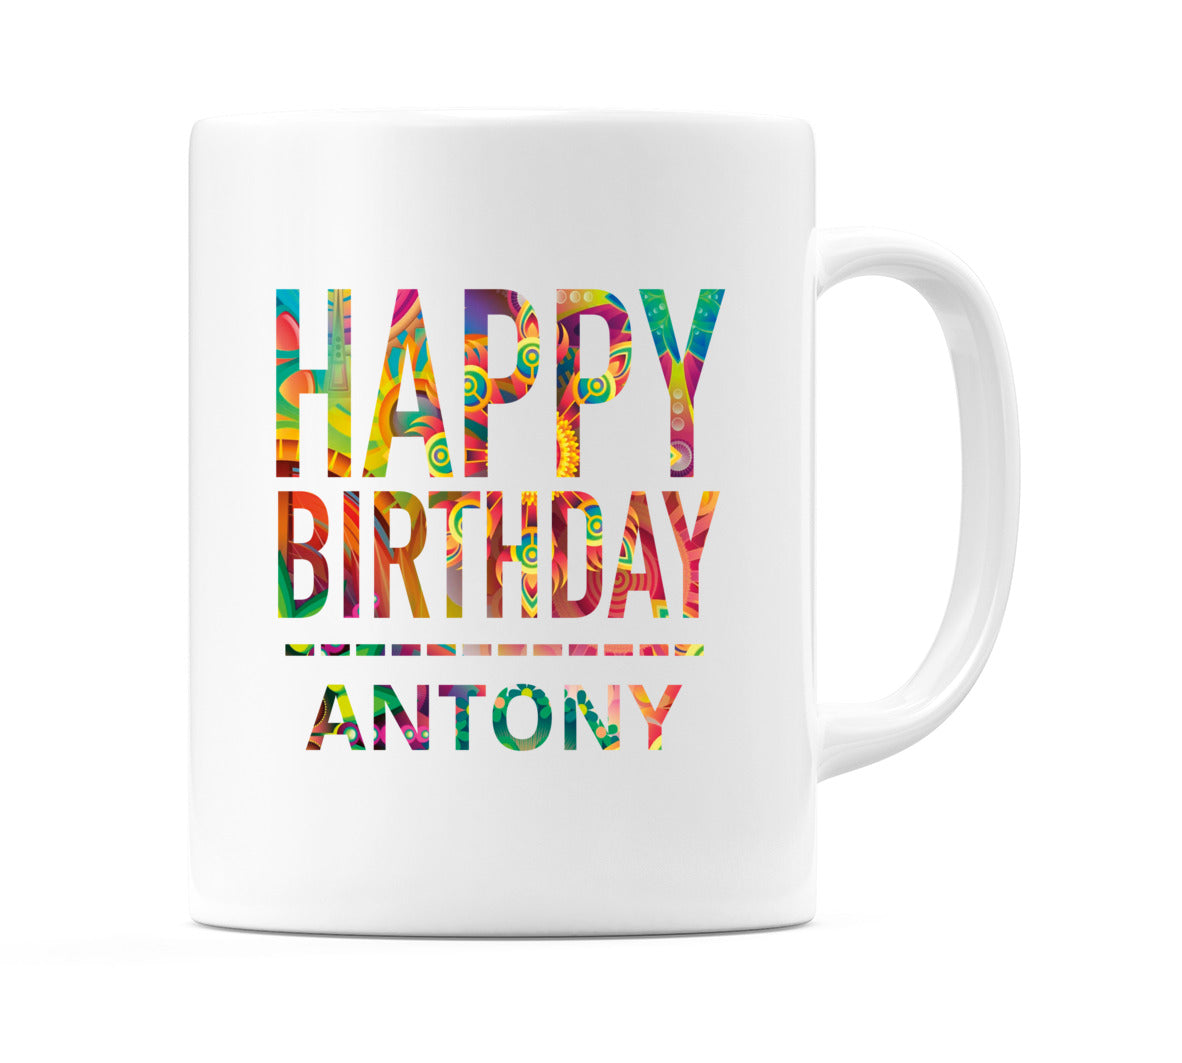 Happy Birthday Antony (Tie Dye Effect) Mug Cup by WeDoMugs